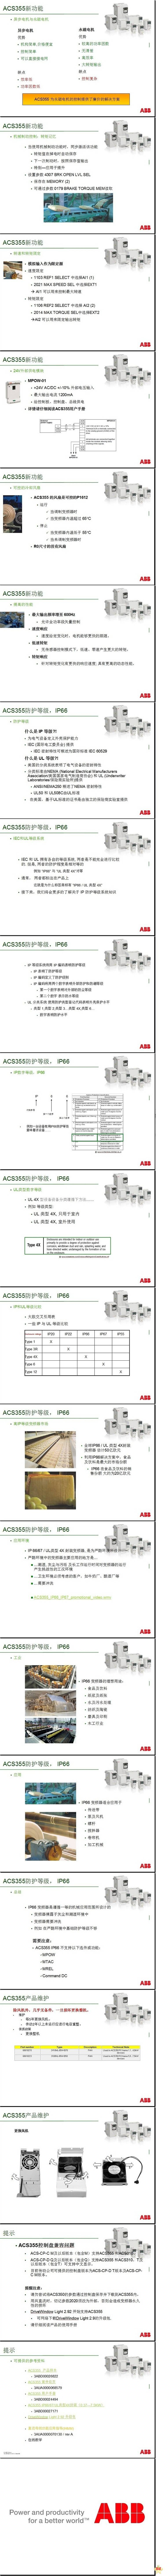 ABB 变频器 机械传动 单相 220V ACS355-01E-06A7-2 变频器,机械传动,微型传动,ACS355,ABB